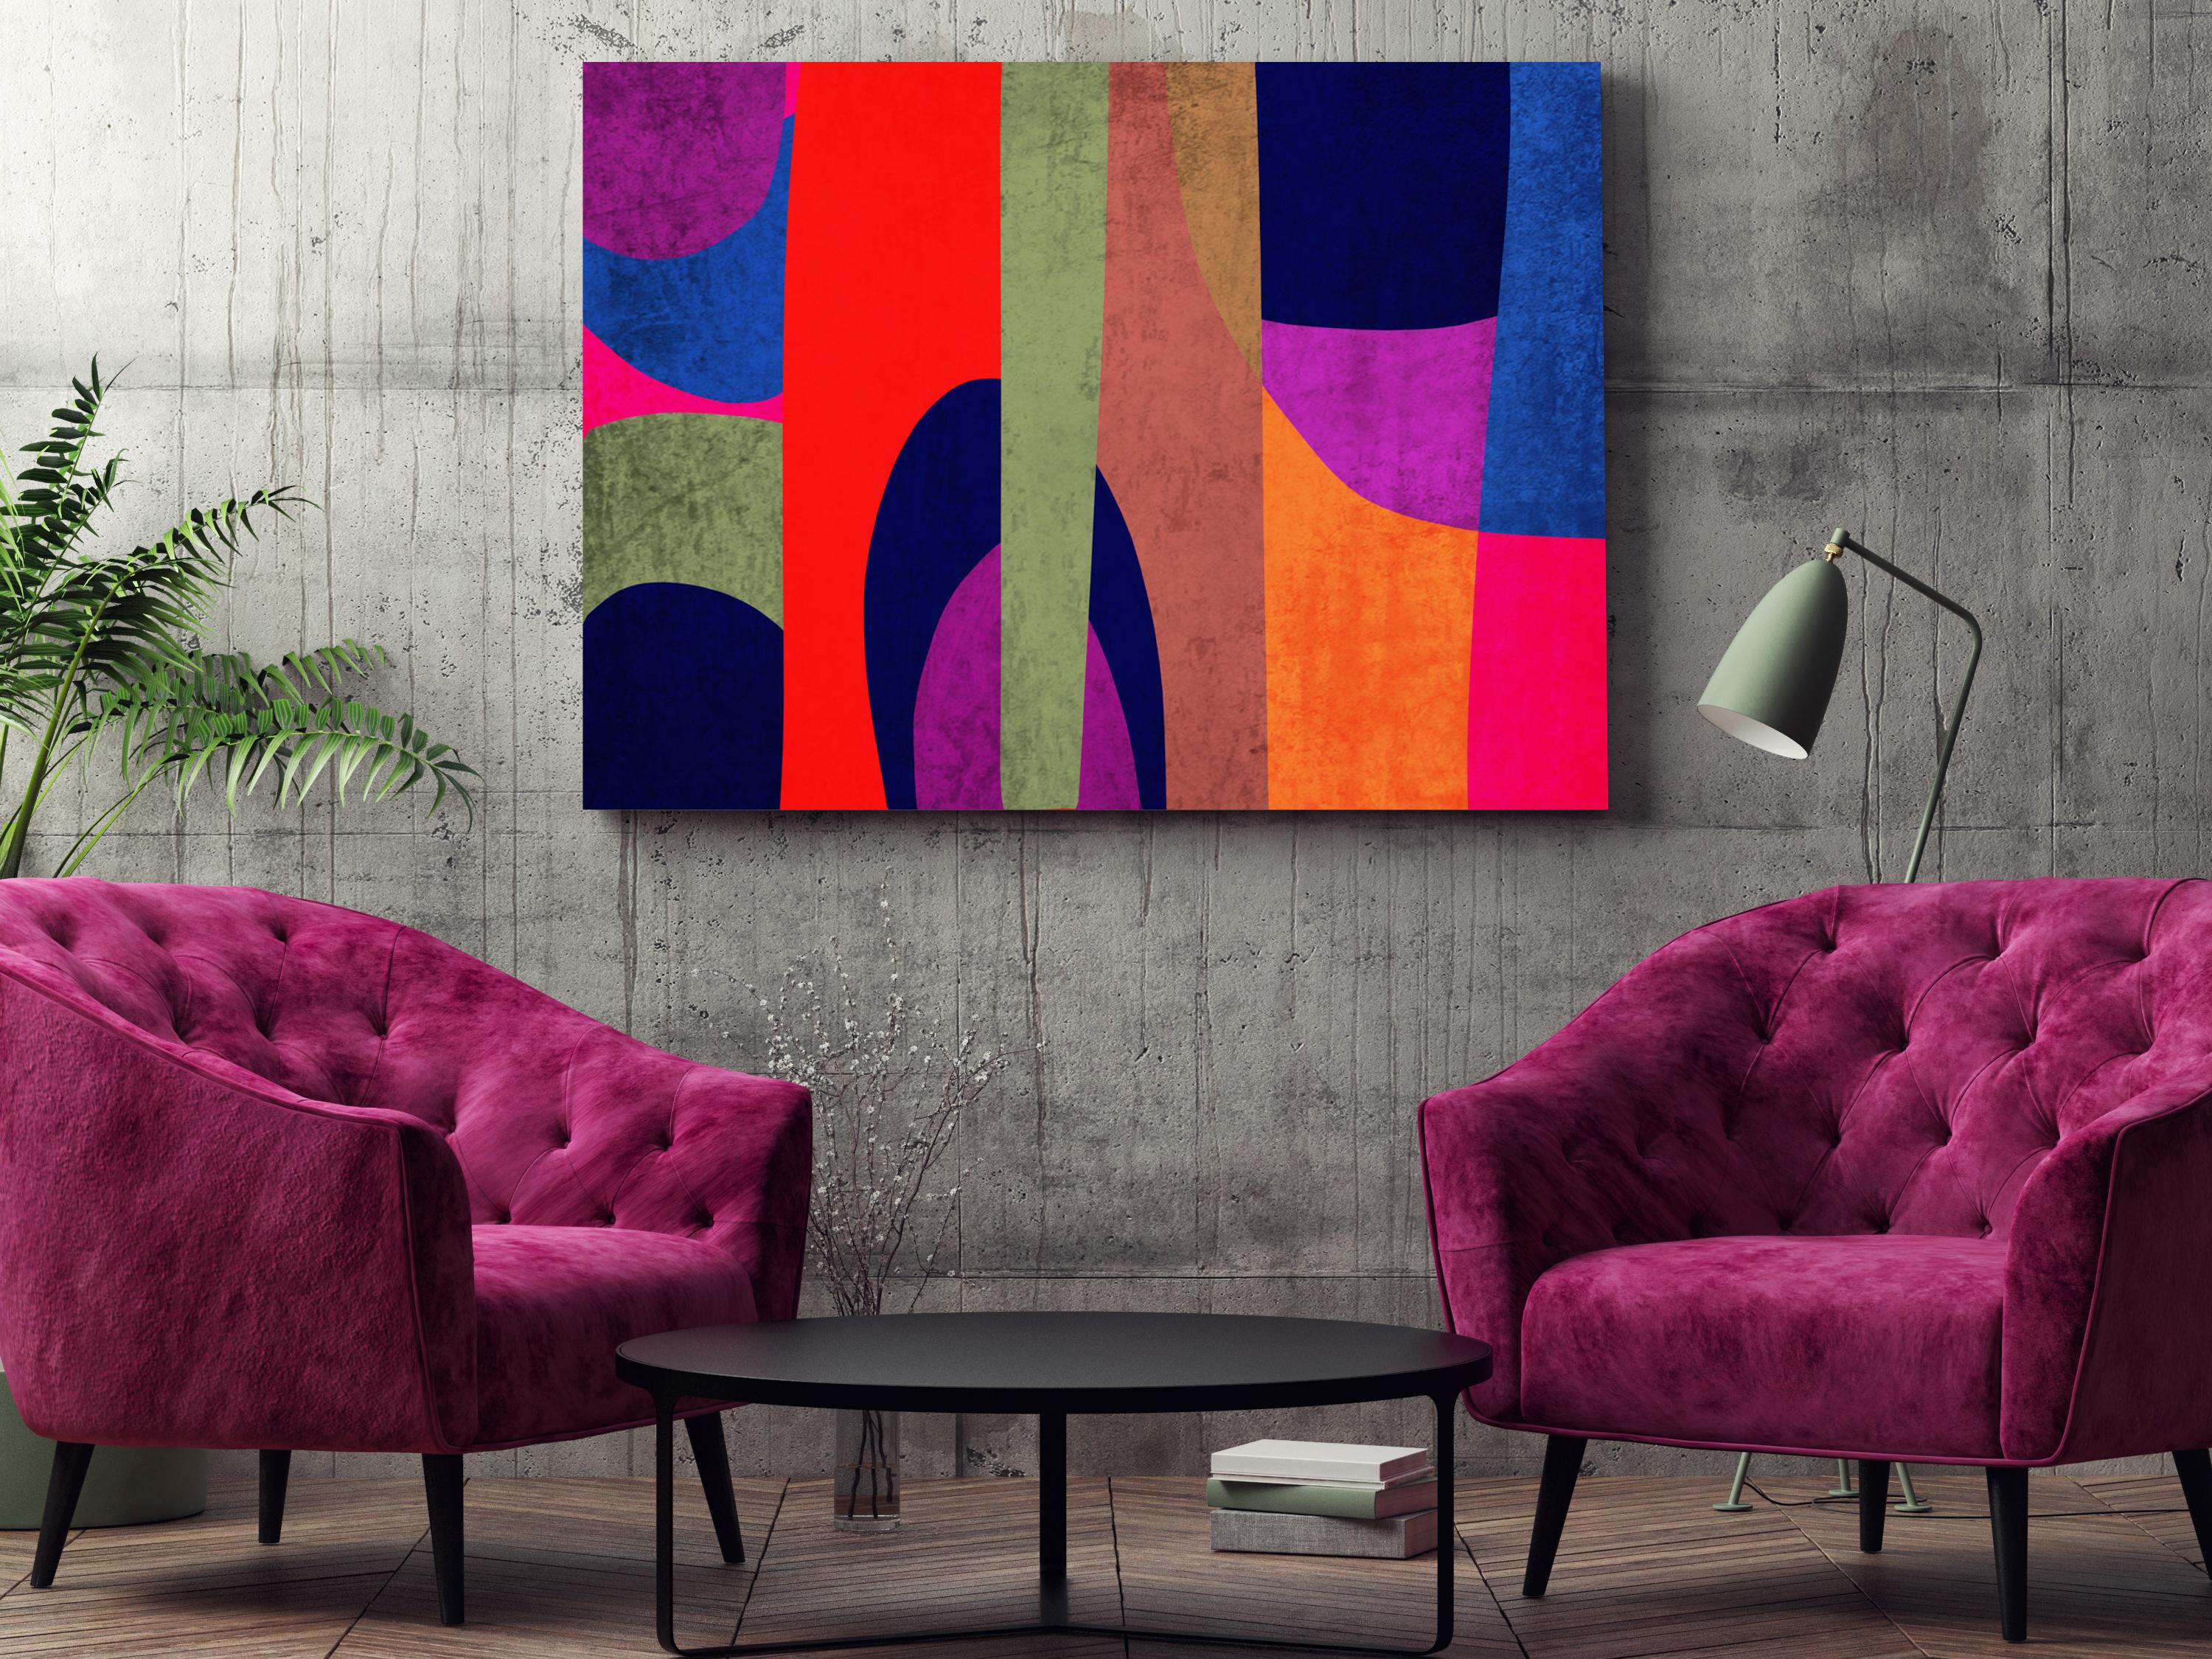 Midcentury Modern Mixed Media Painting on Canvas Art shape colors 21-40-0 - Mixed Media Art by Irena Orlov